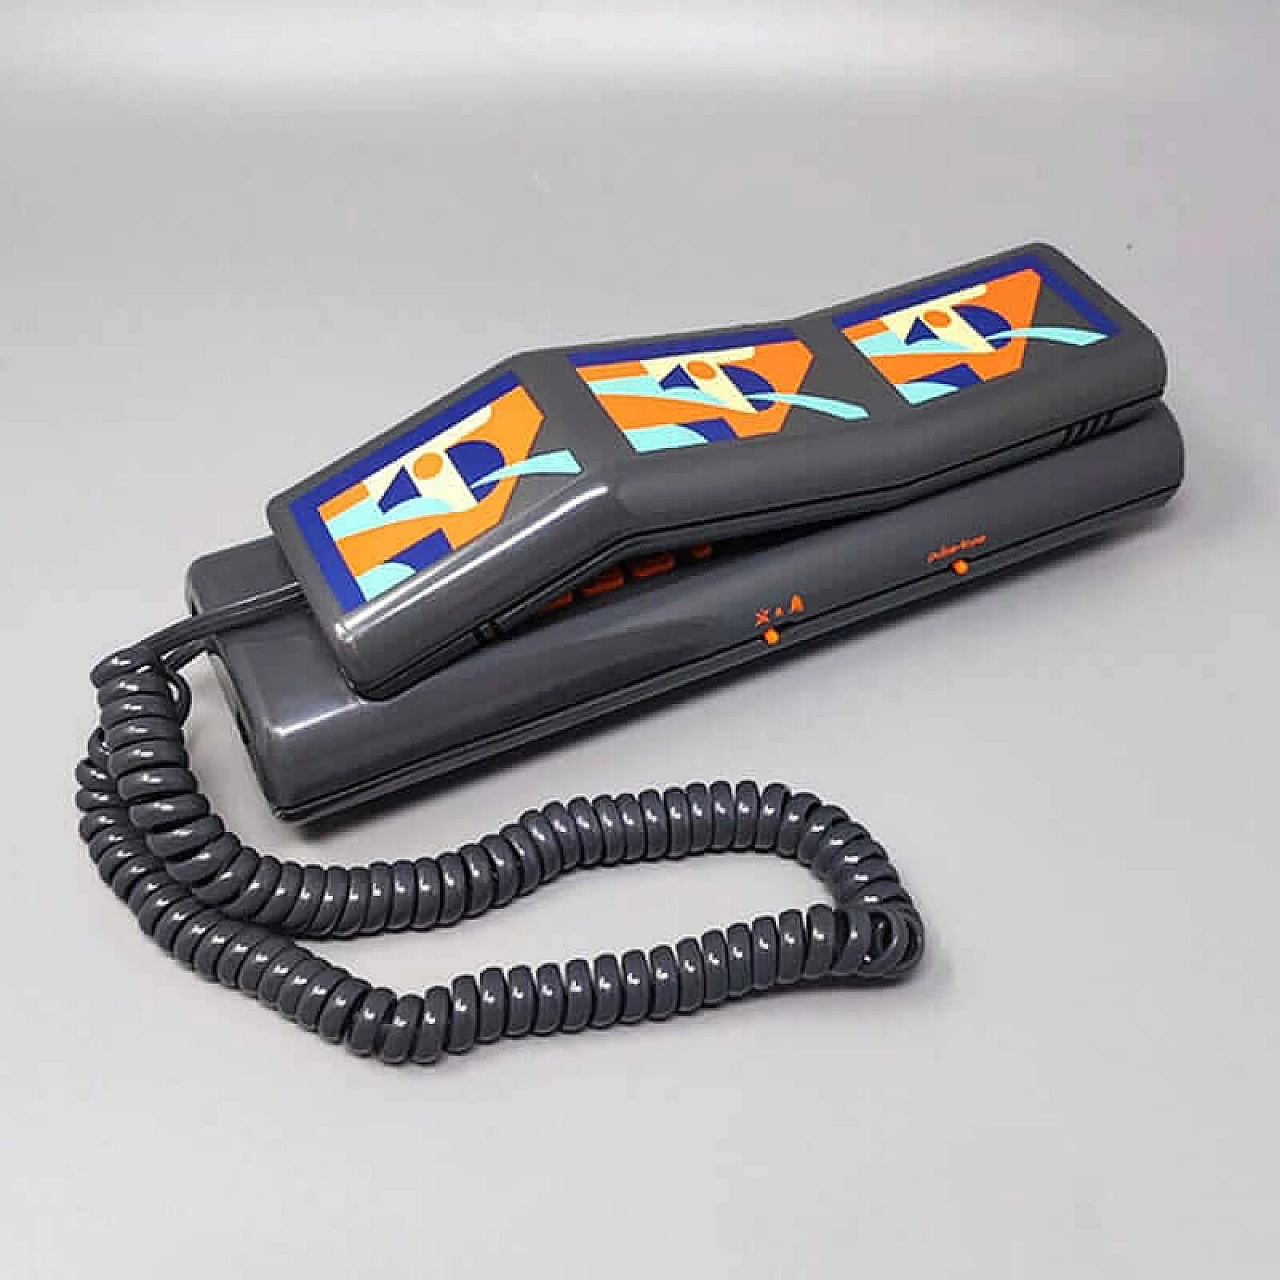 Deco Swatch Twin Phone landline phone, 1980s 1